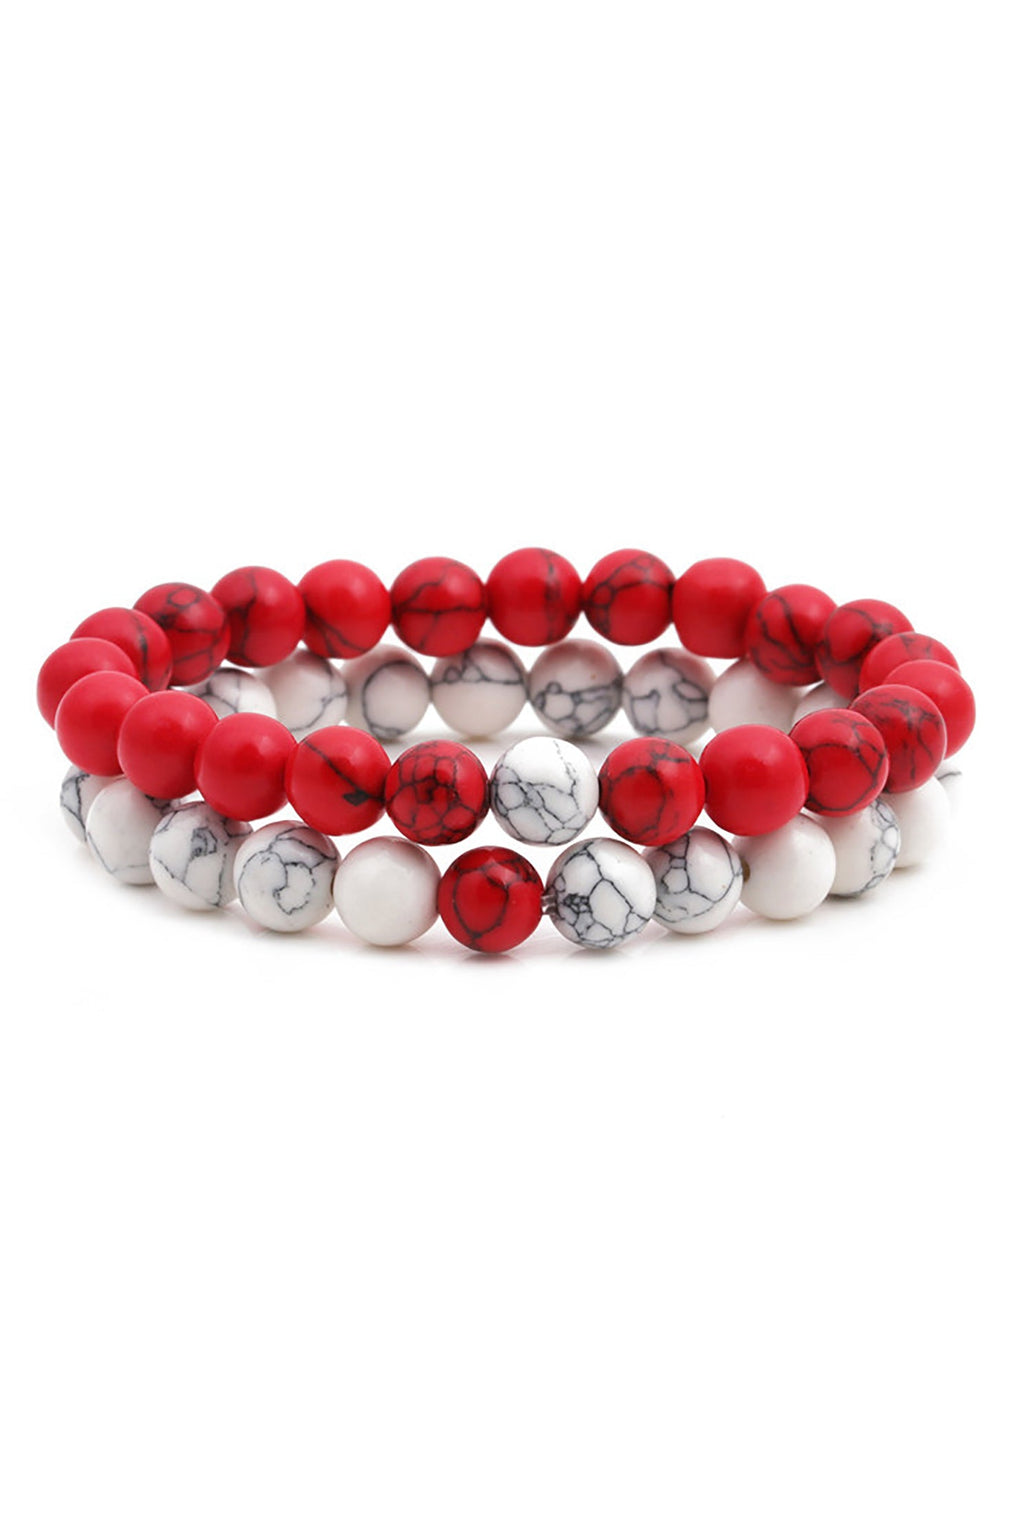 James Red and White Agate Bracelet Set: A Distinguished Blend of Elegance and Vibrancy